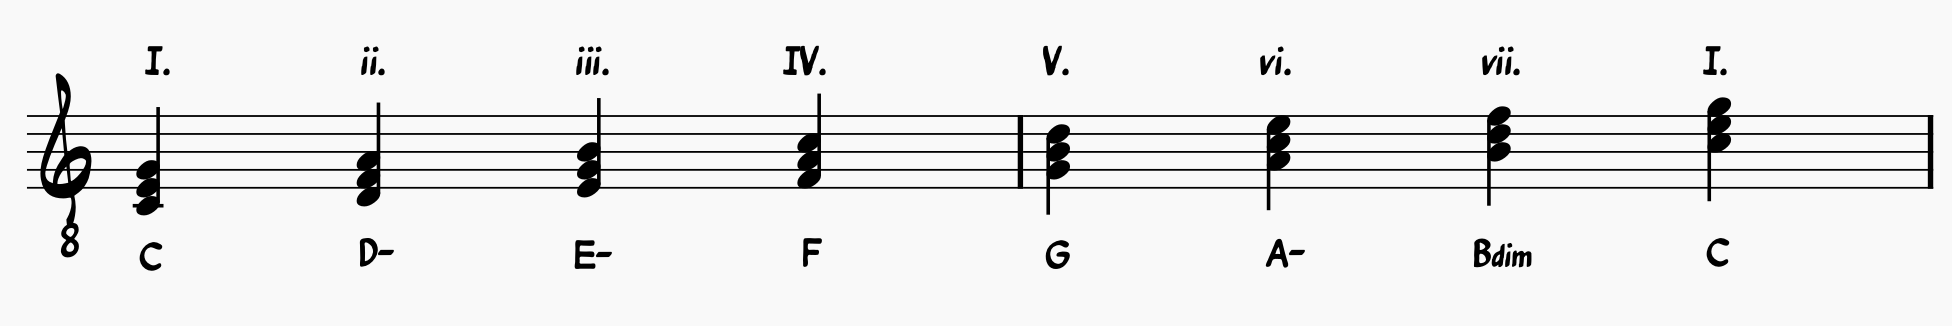 Diatonic triads in the key of C